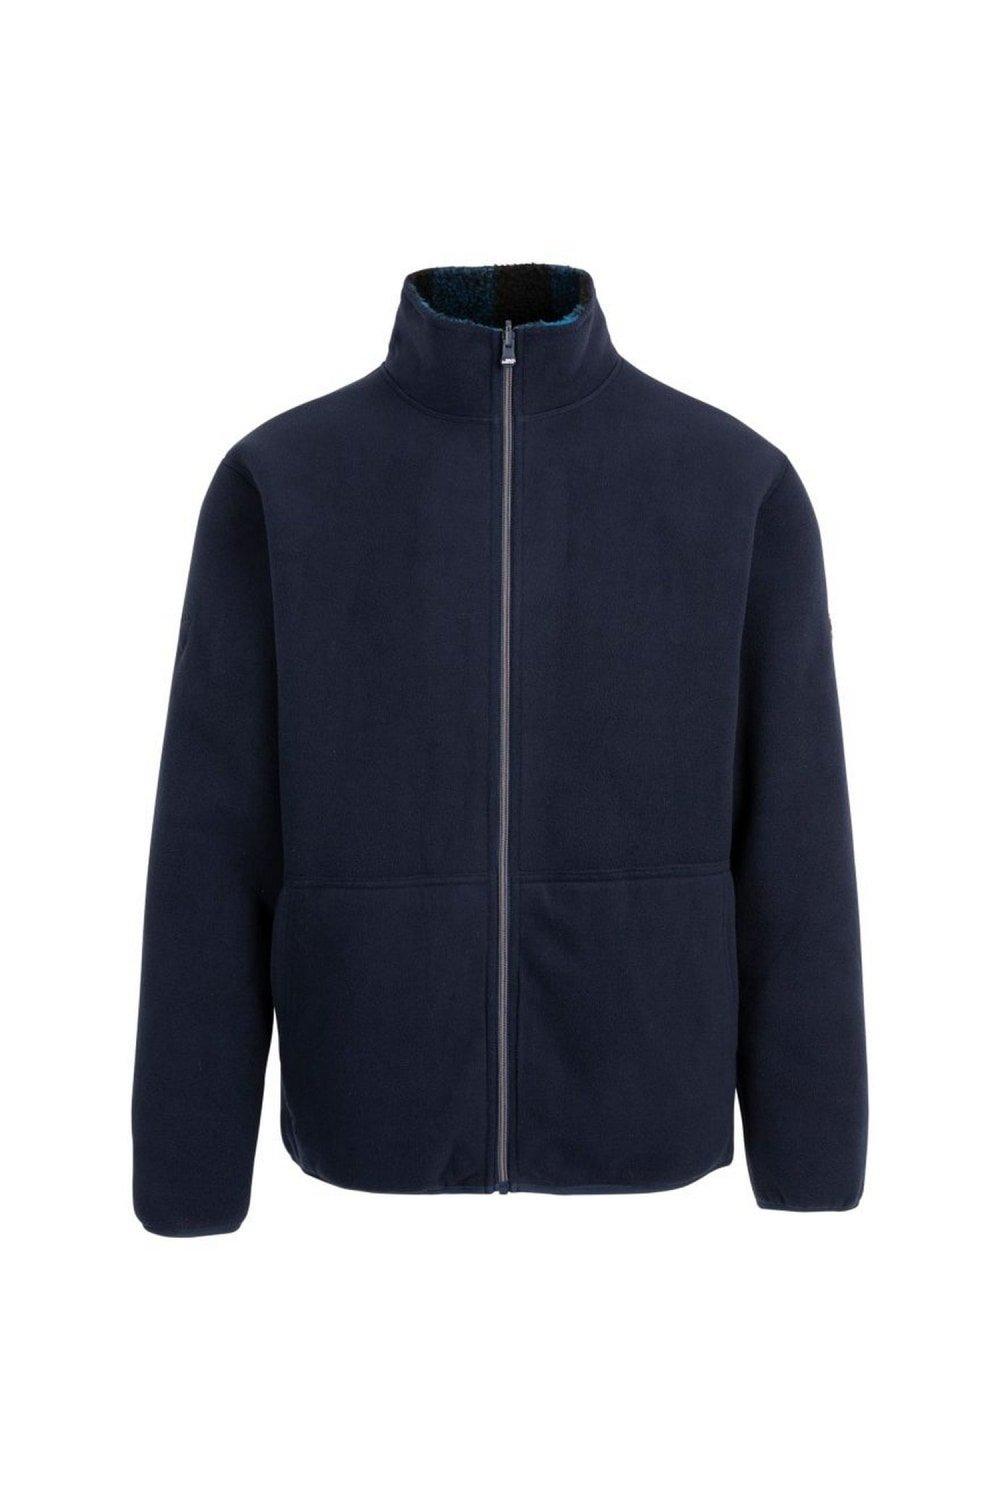 Флисовая куртка Tatsfield Trespass, темно-синий